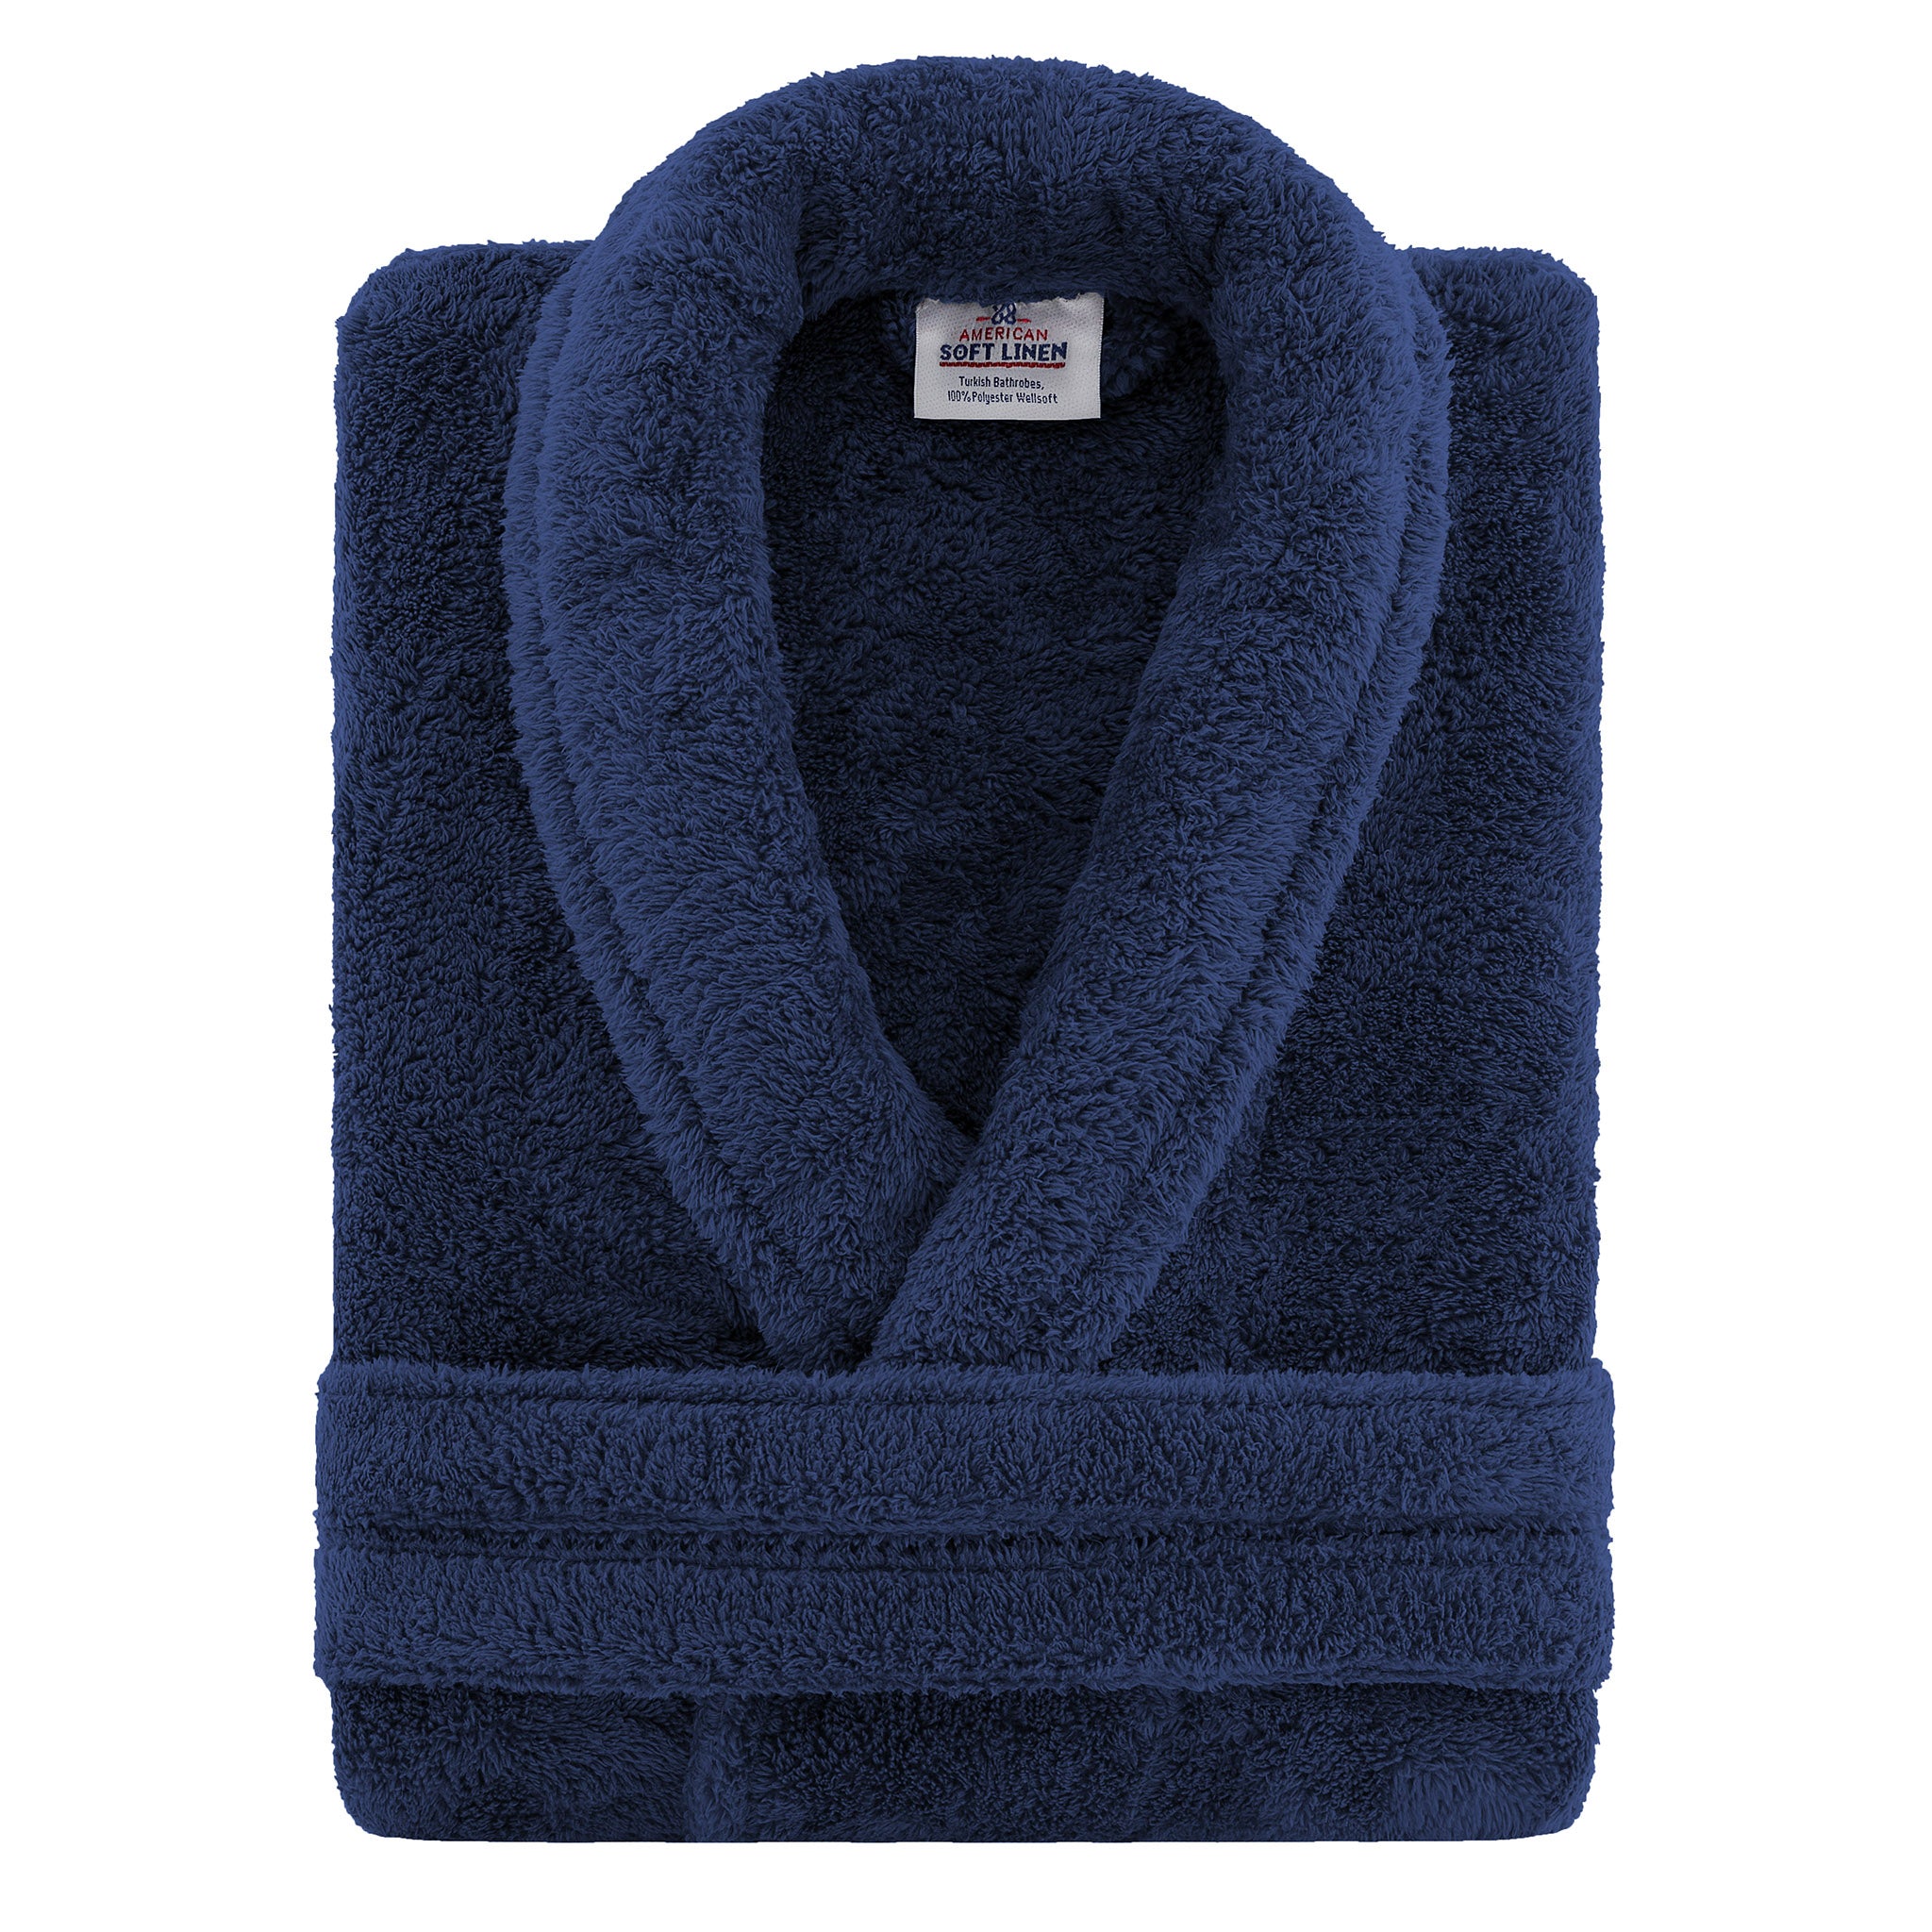 American Soft Linen Super Soft Absorbent and Fluffy Unisex Fleece Bathrobe -12 Set Case Pack -M-L-navy-blue-3